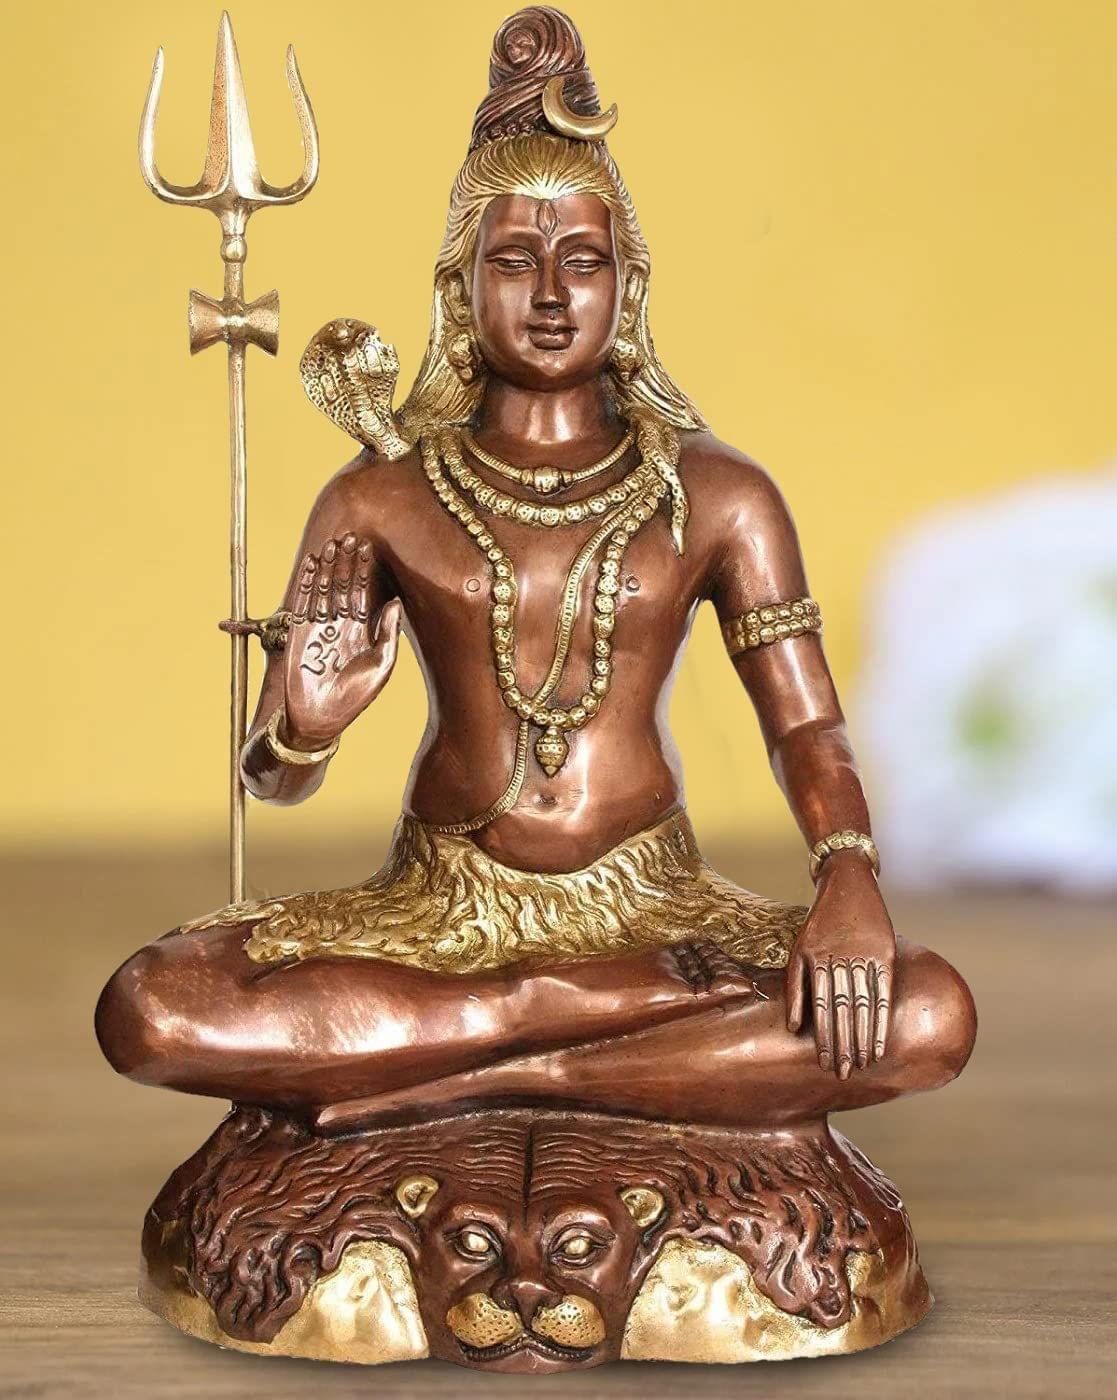 God Shiva Meditation iPhone Wallpaper HD - iPhone Wallpapers